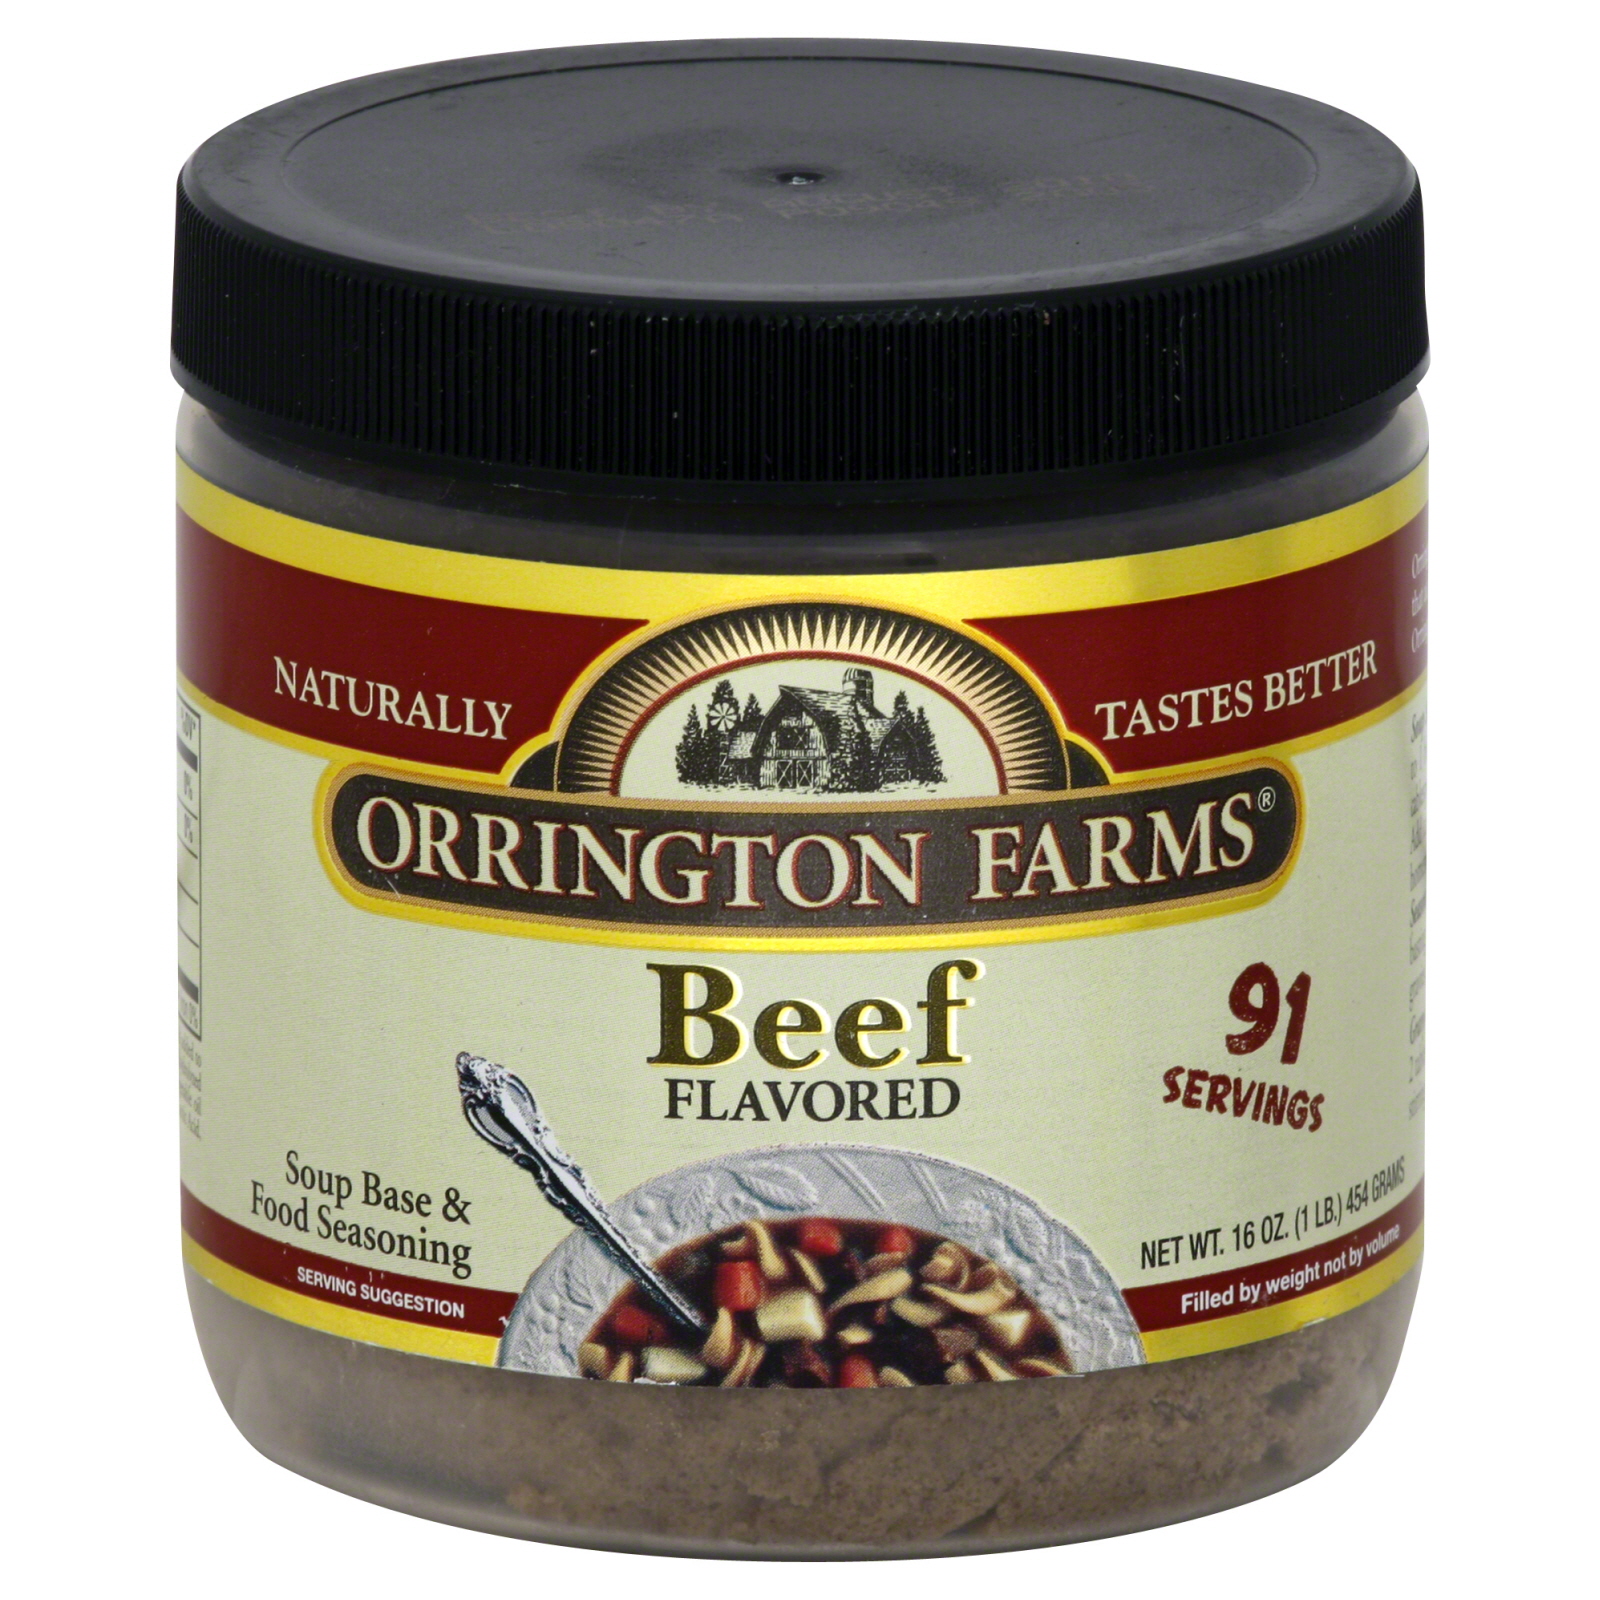 Orrington Farms Soup Base & Food Seasoning, Beef Flavored